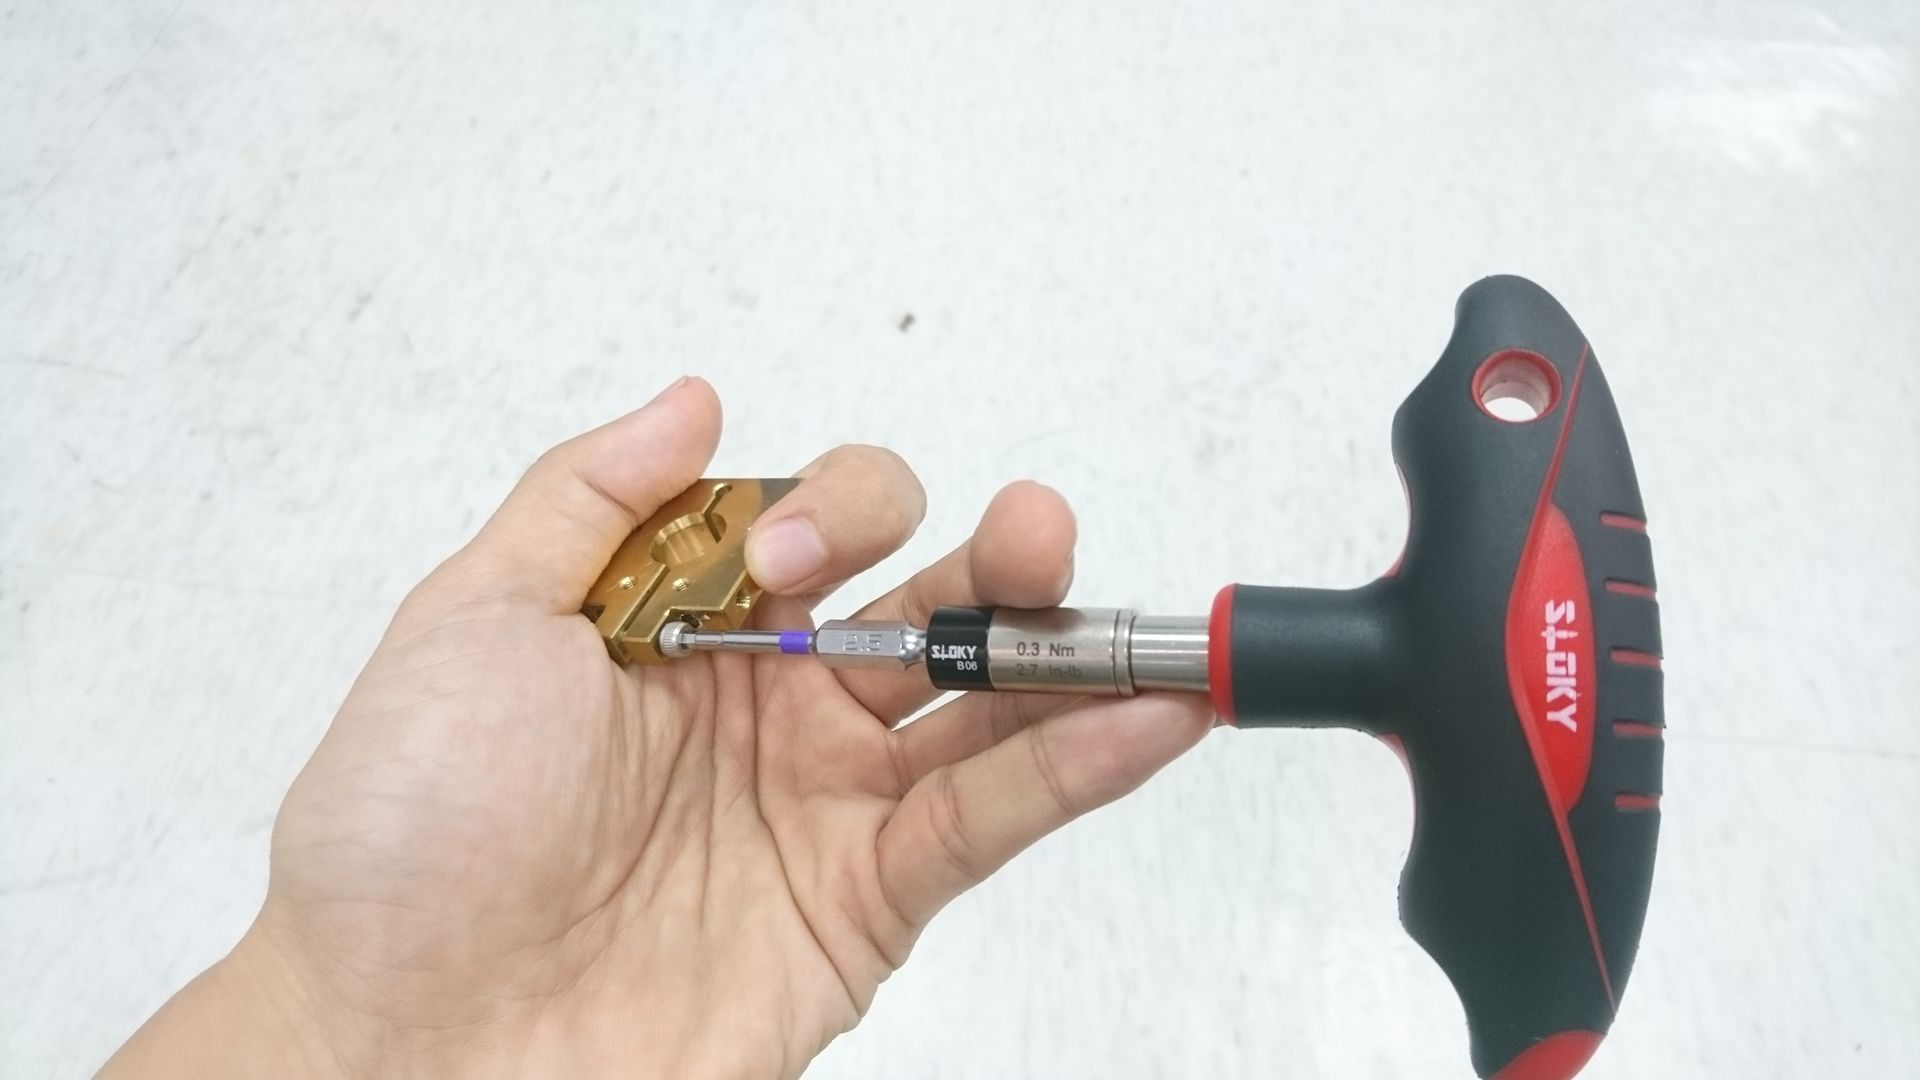 Let's make your own copper fastening torque screwdriver set